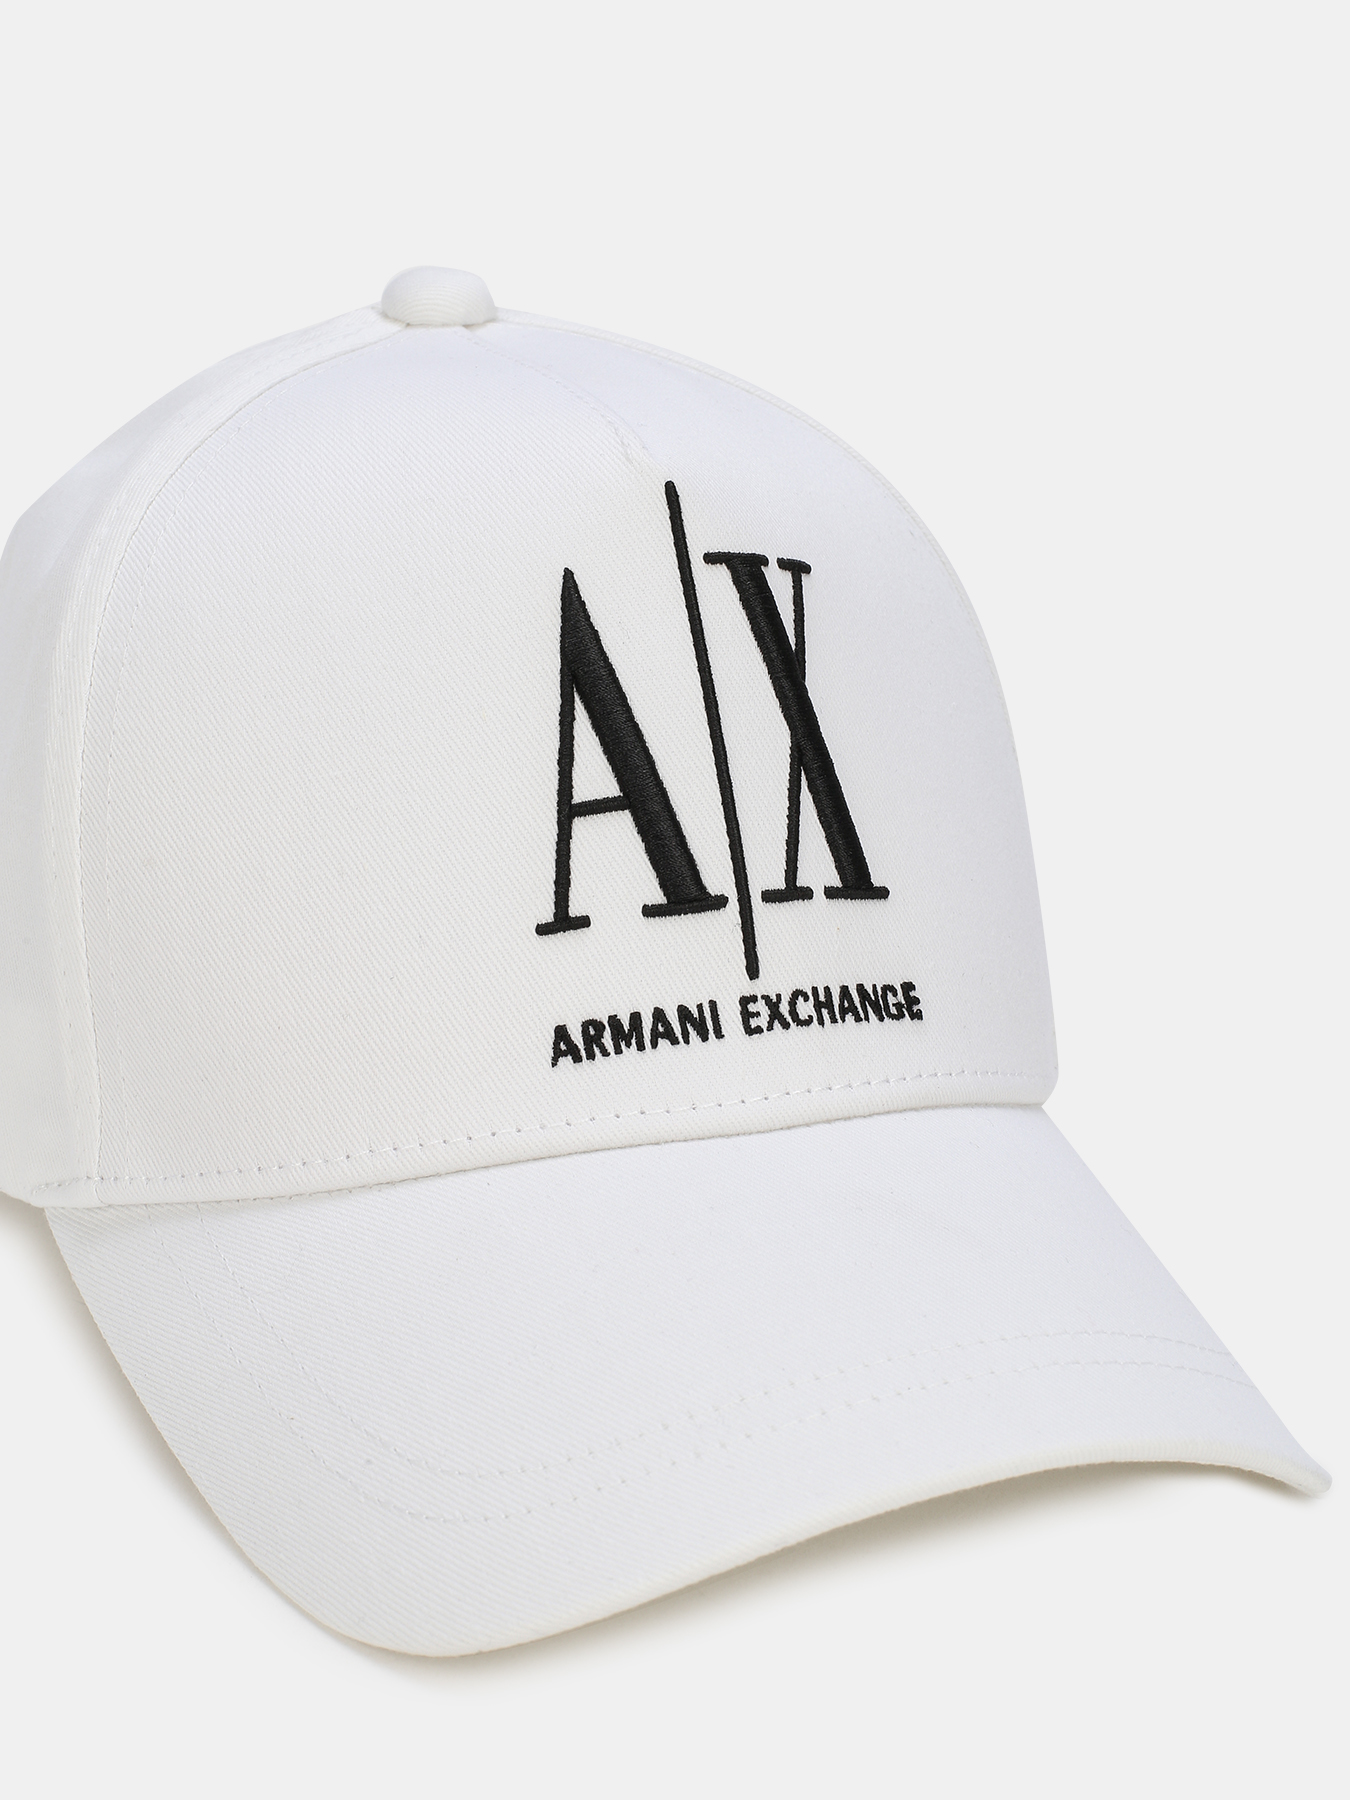 Кепка Armani Exchange. Armani Exchange бежевая кепка. Armani Exchange интернет магазин Москва. Армани эксчендж интернет магазин